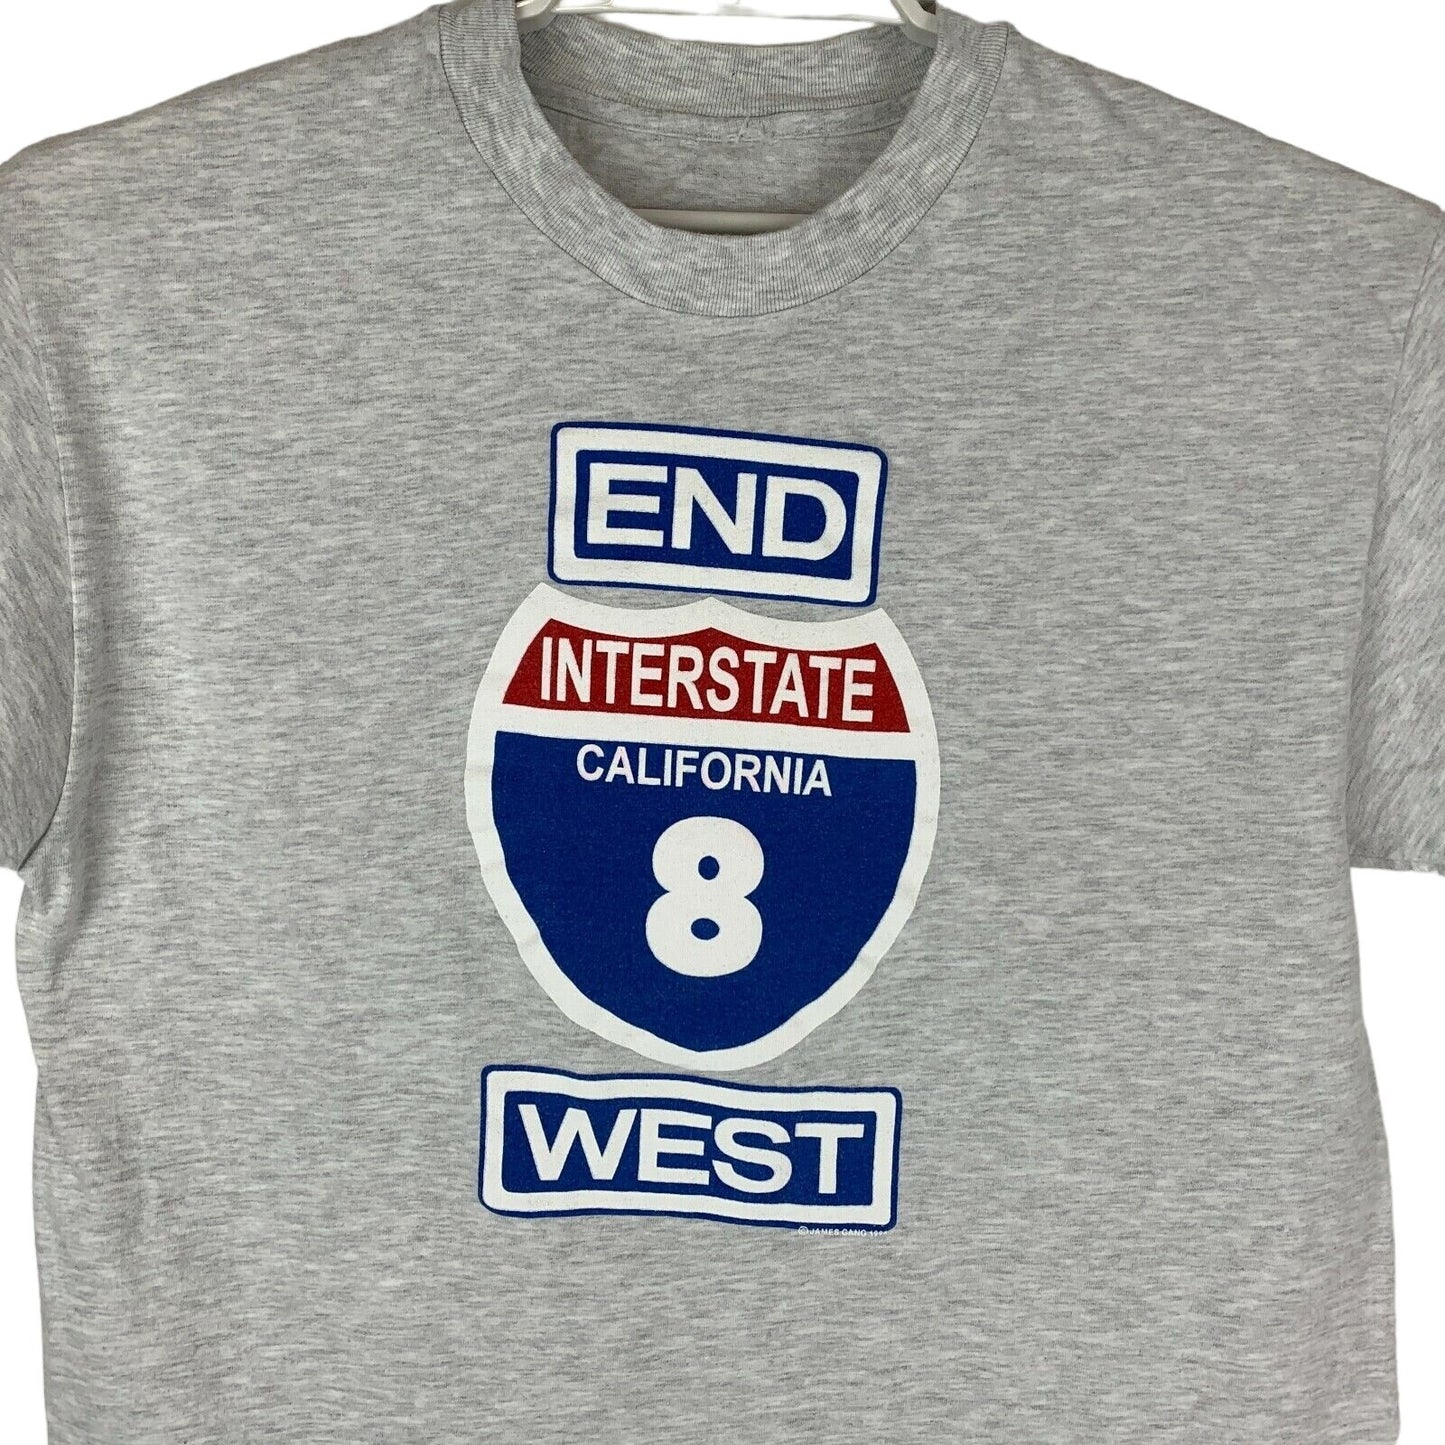 Interstate 8 California San Diego Vintage 90s T Shirt Freeway Highway Tee Large